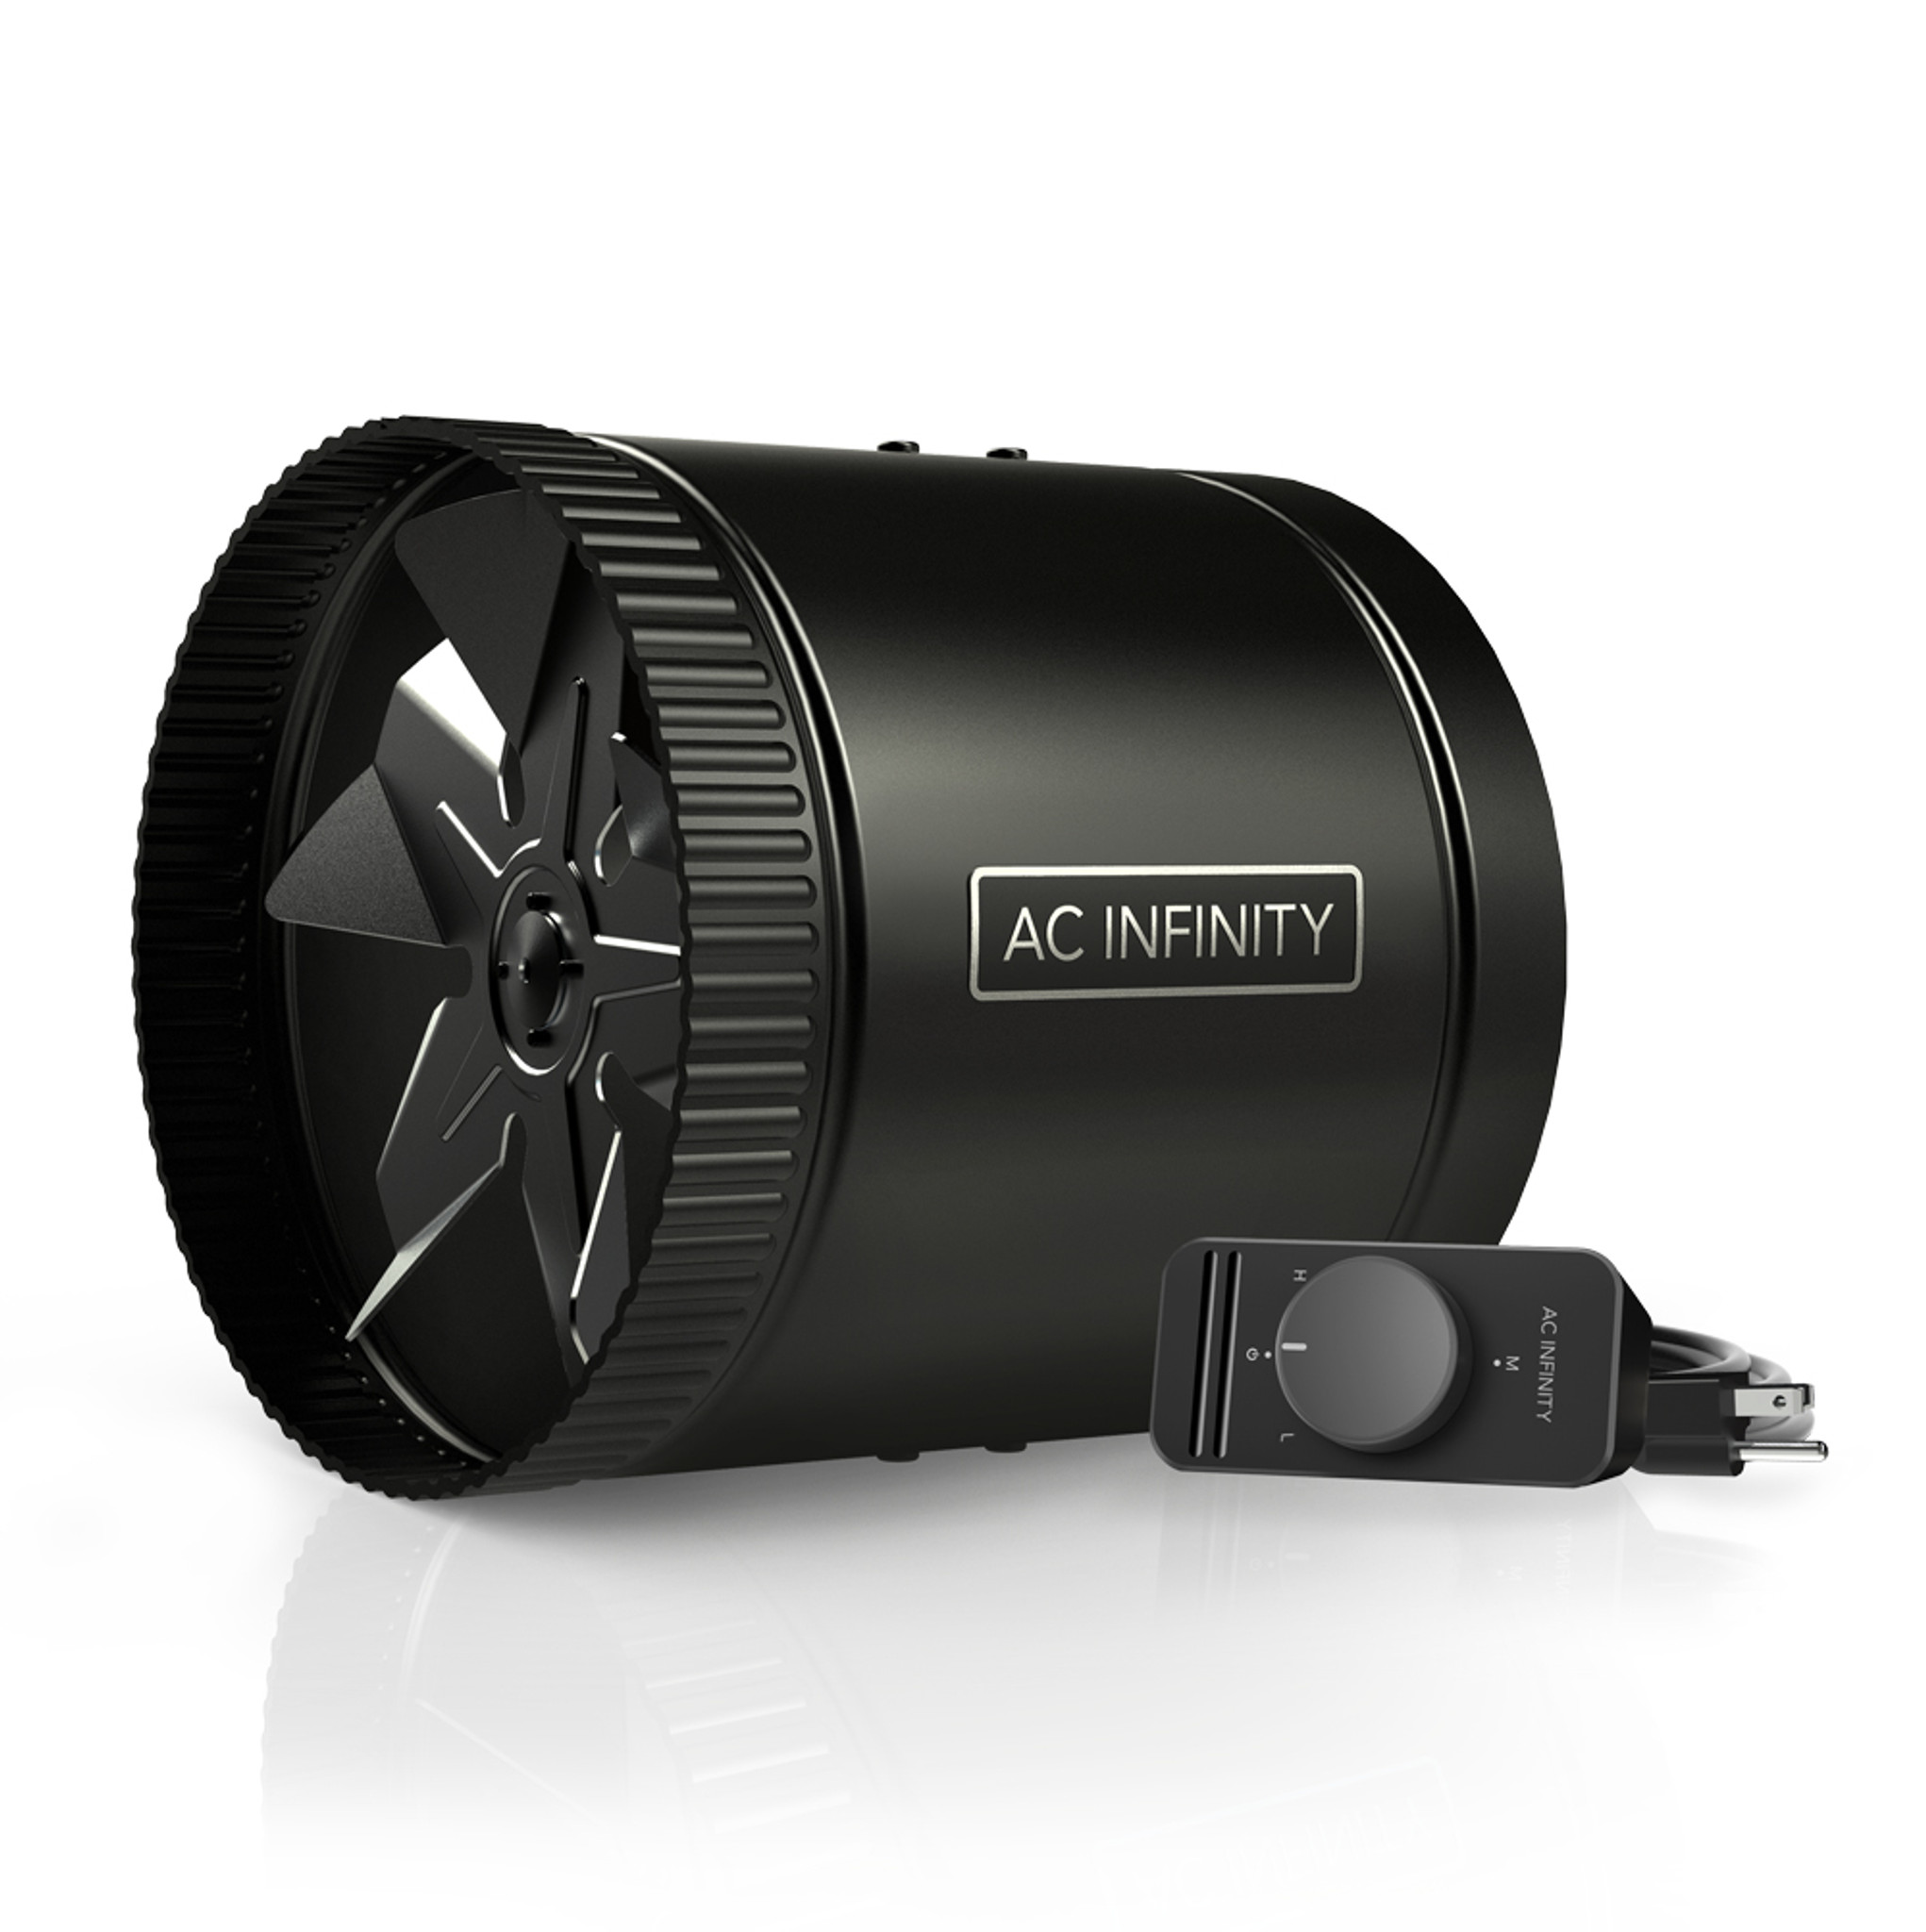 AC Infinity CLOUDLINE S8 静音 8インチダクトファン - 冷暖房/空調